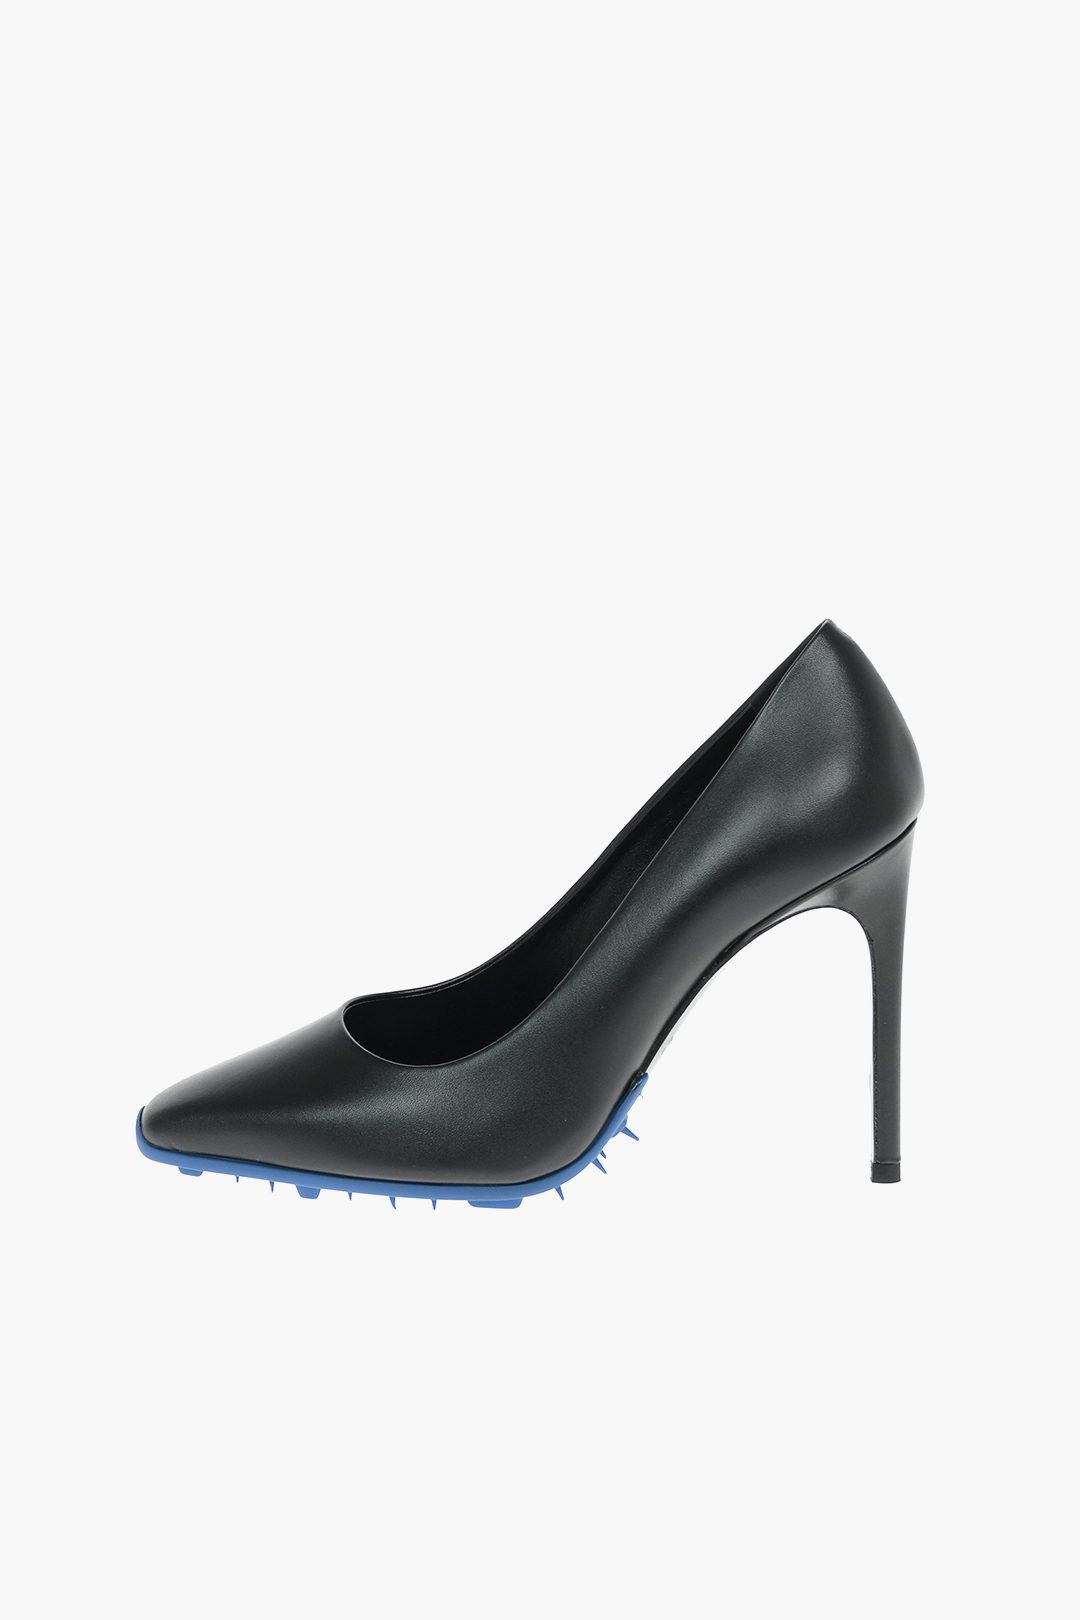 Spiked high heels Stock Photo - Alamy